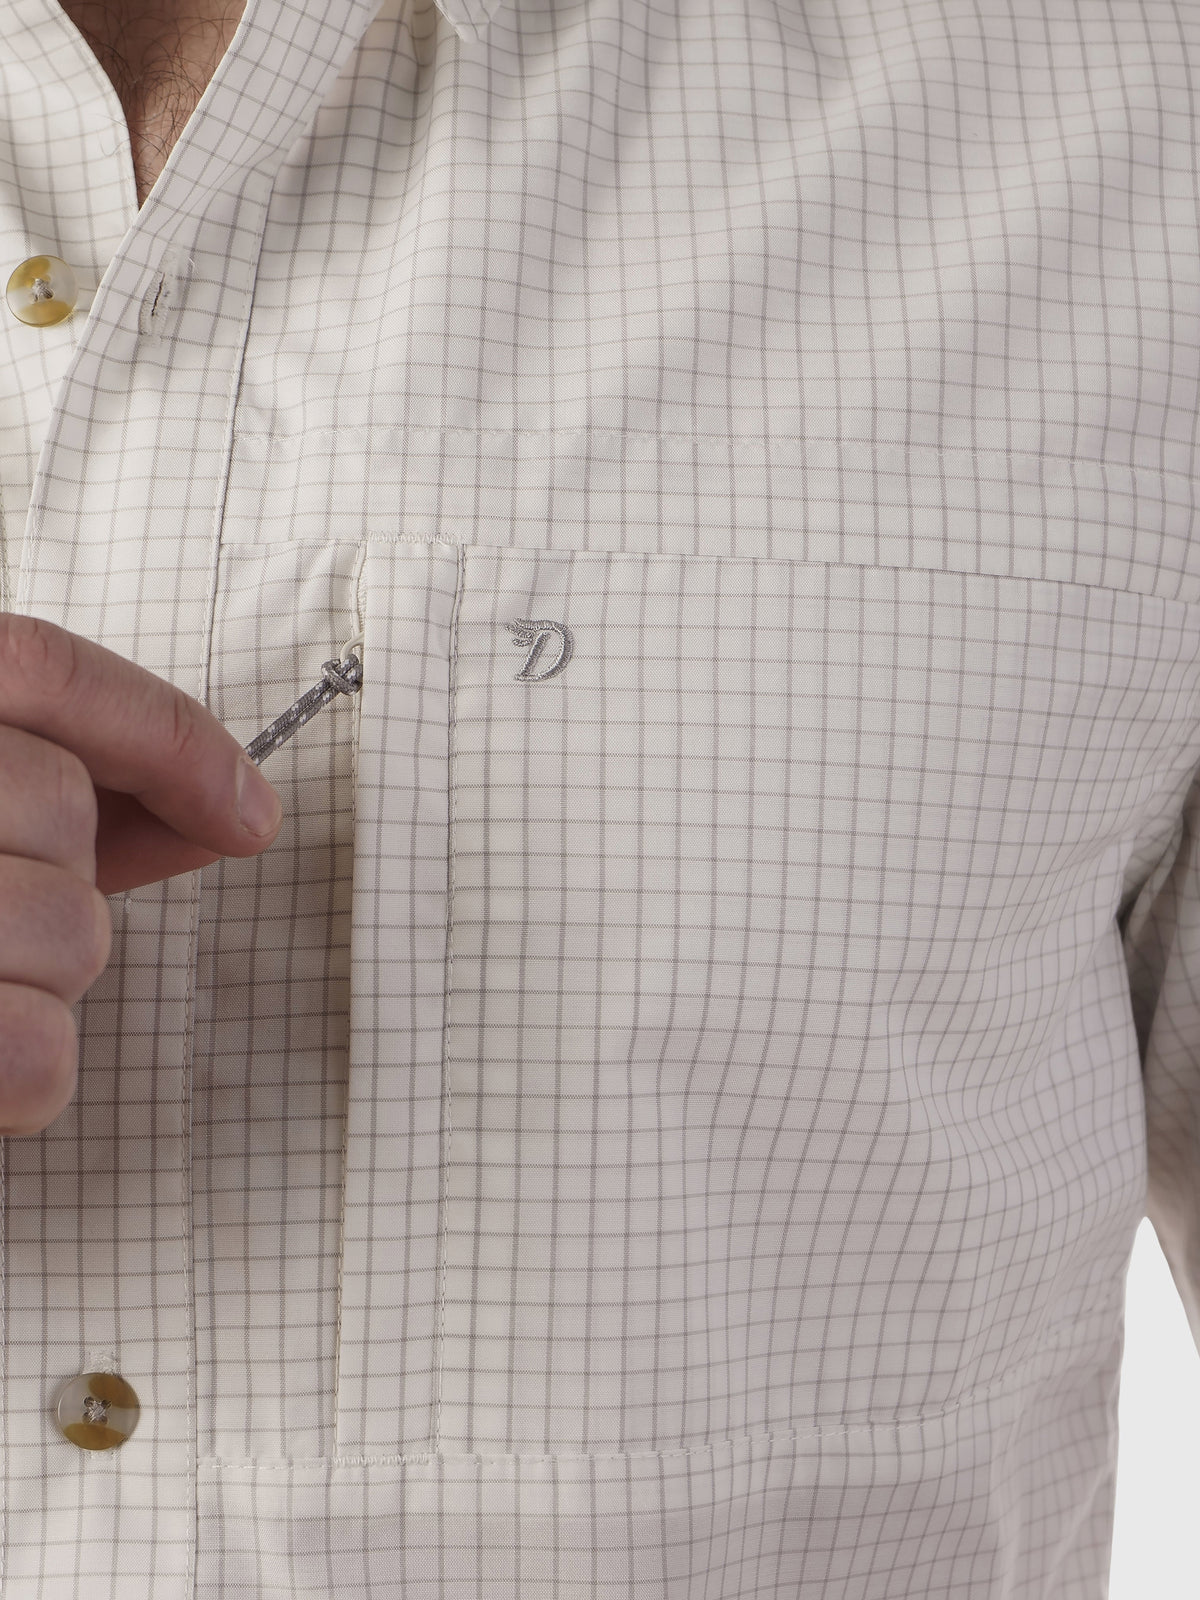 Helm Shirt Long Sleeve - White Oyster Grid